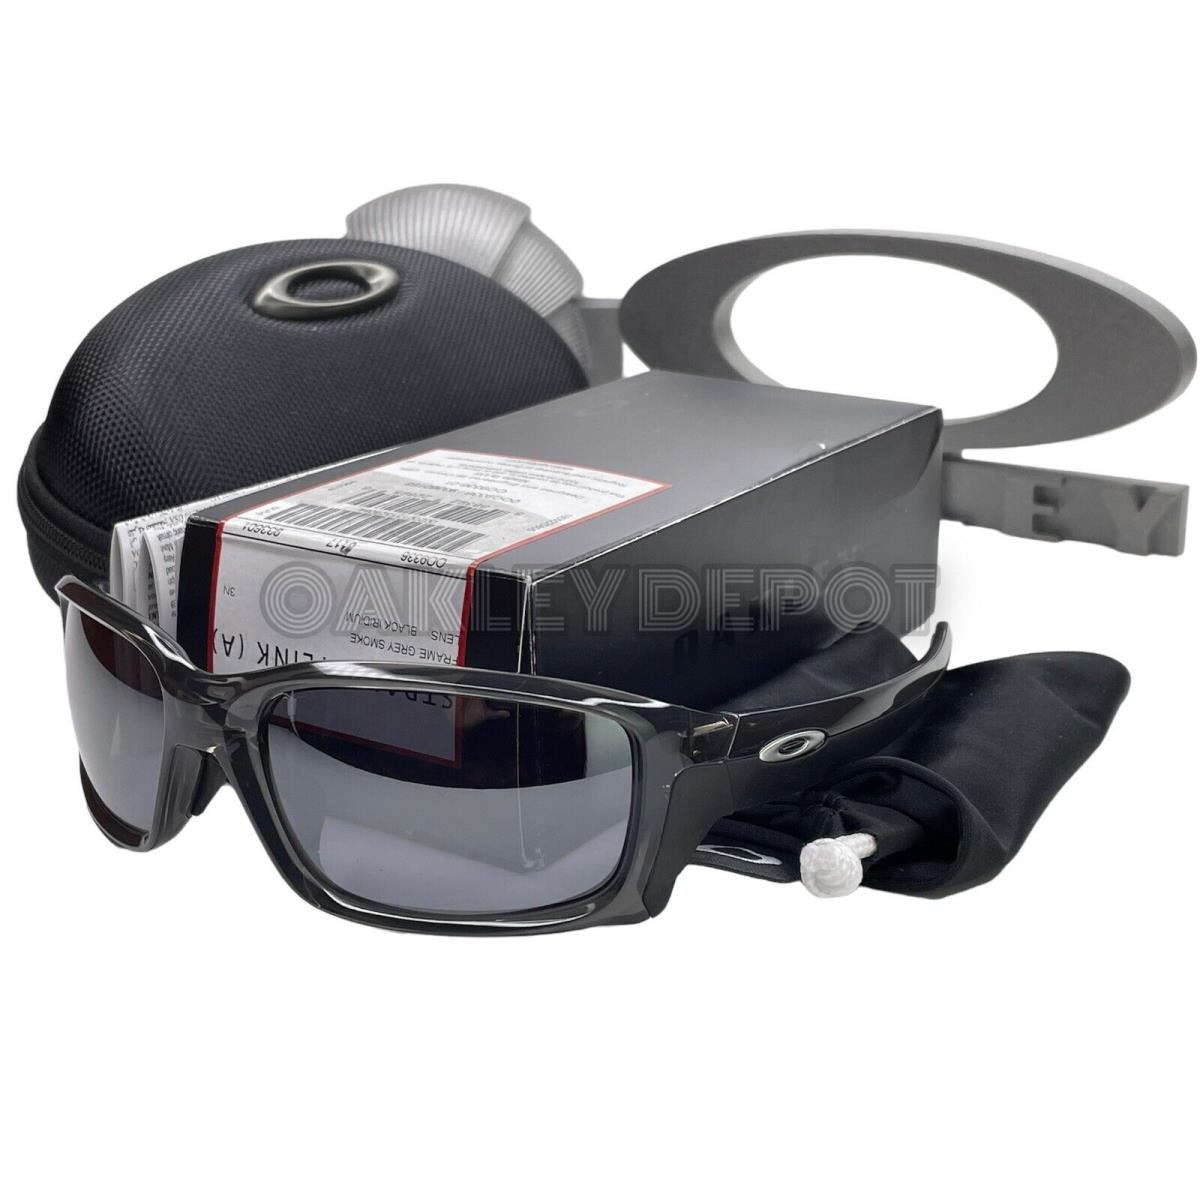 Oakley Straightlink 009336 Grey Smoke/black Iridium Sunglasses A Fit 52